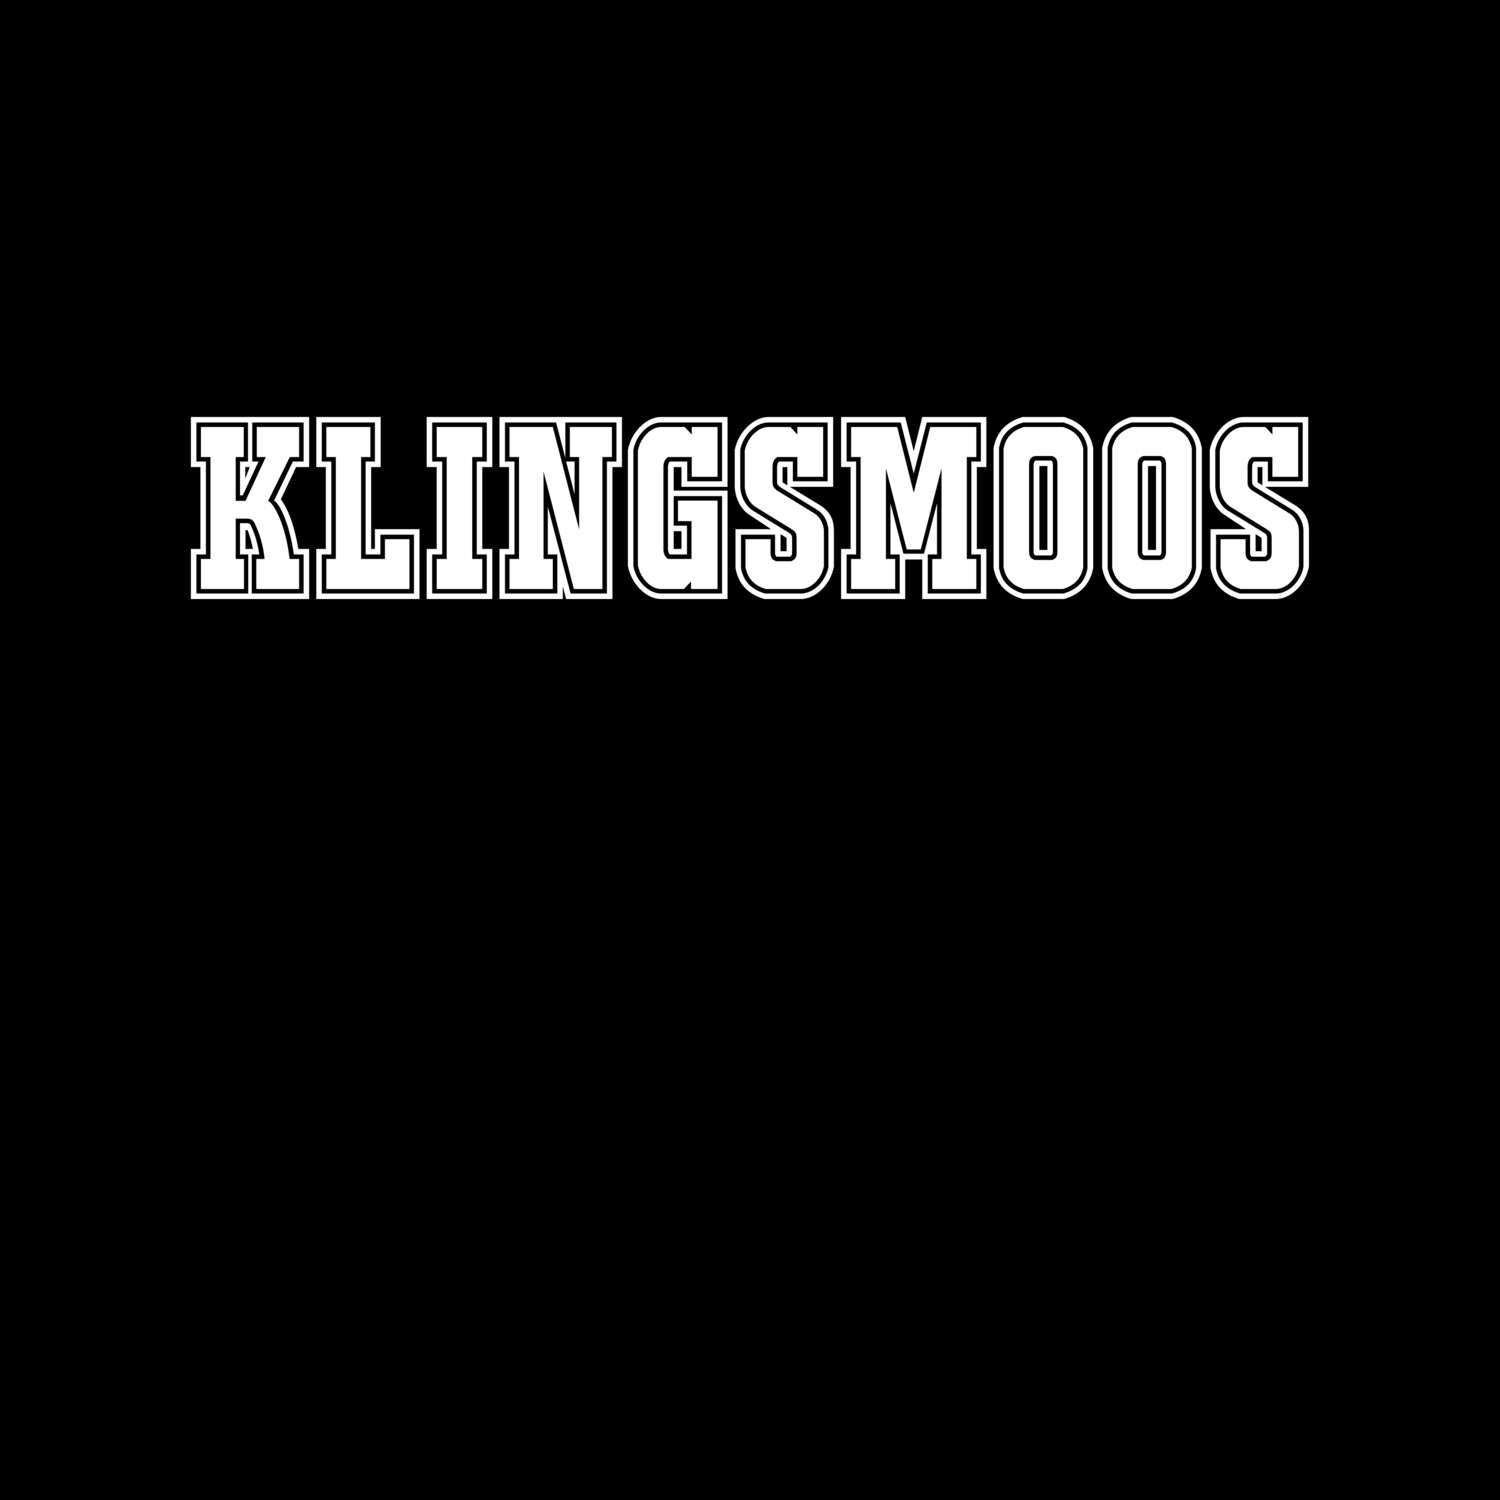 Klingsmoos T-Shirt »Classic«